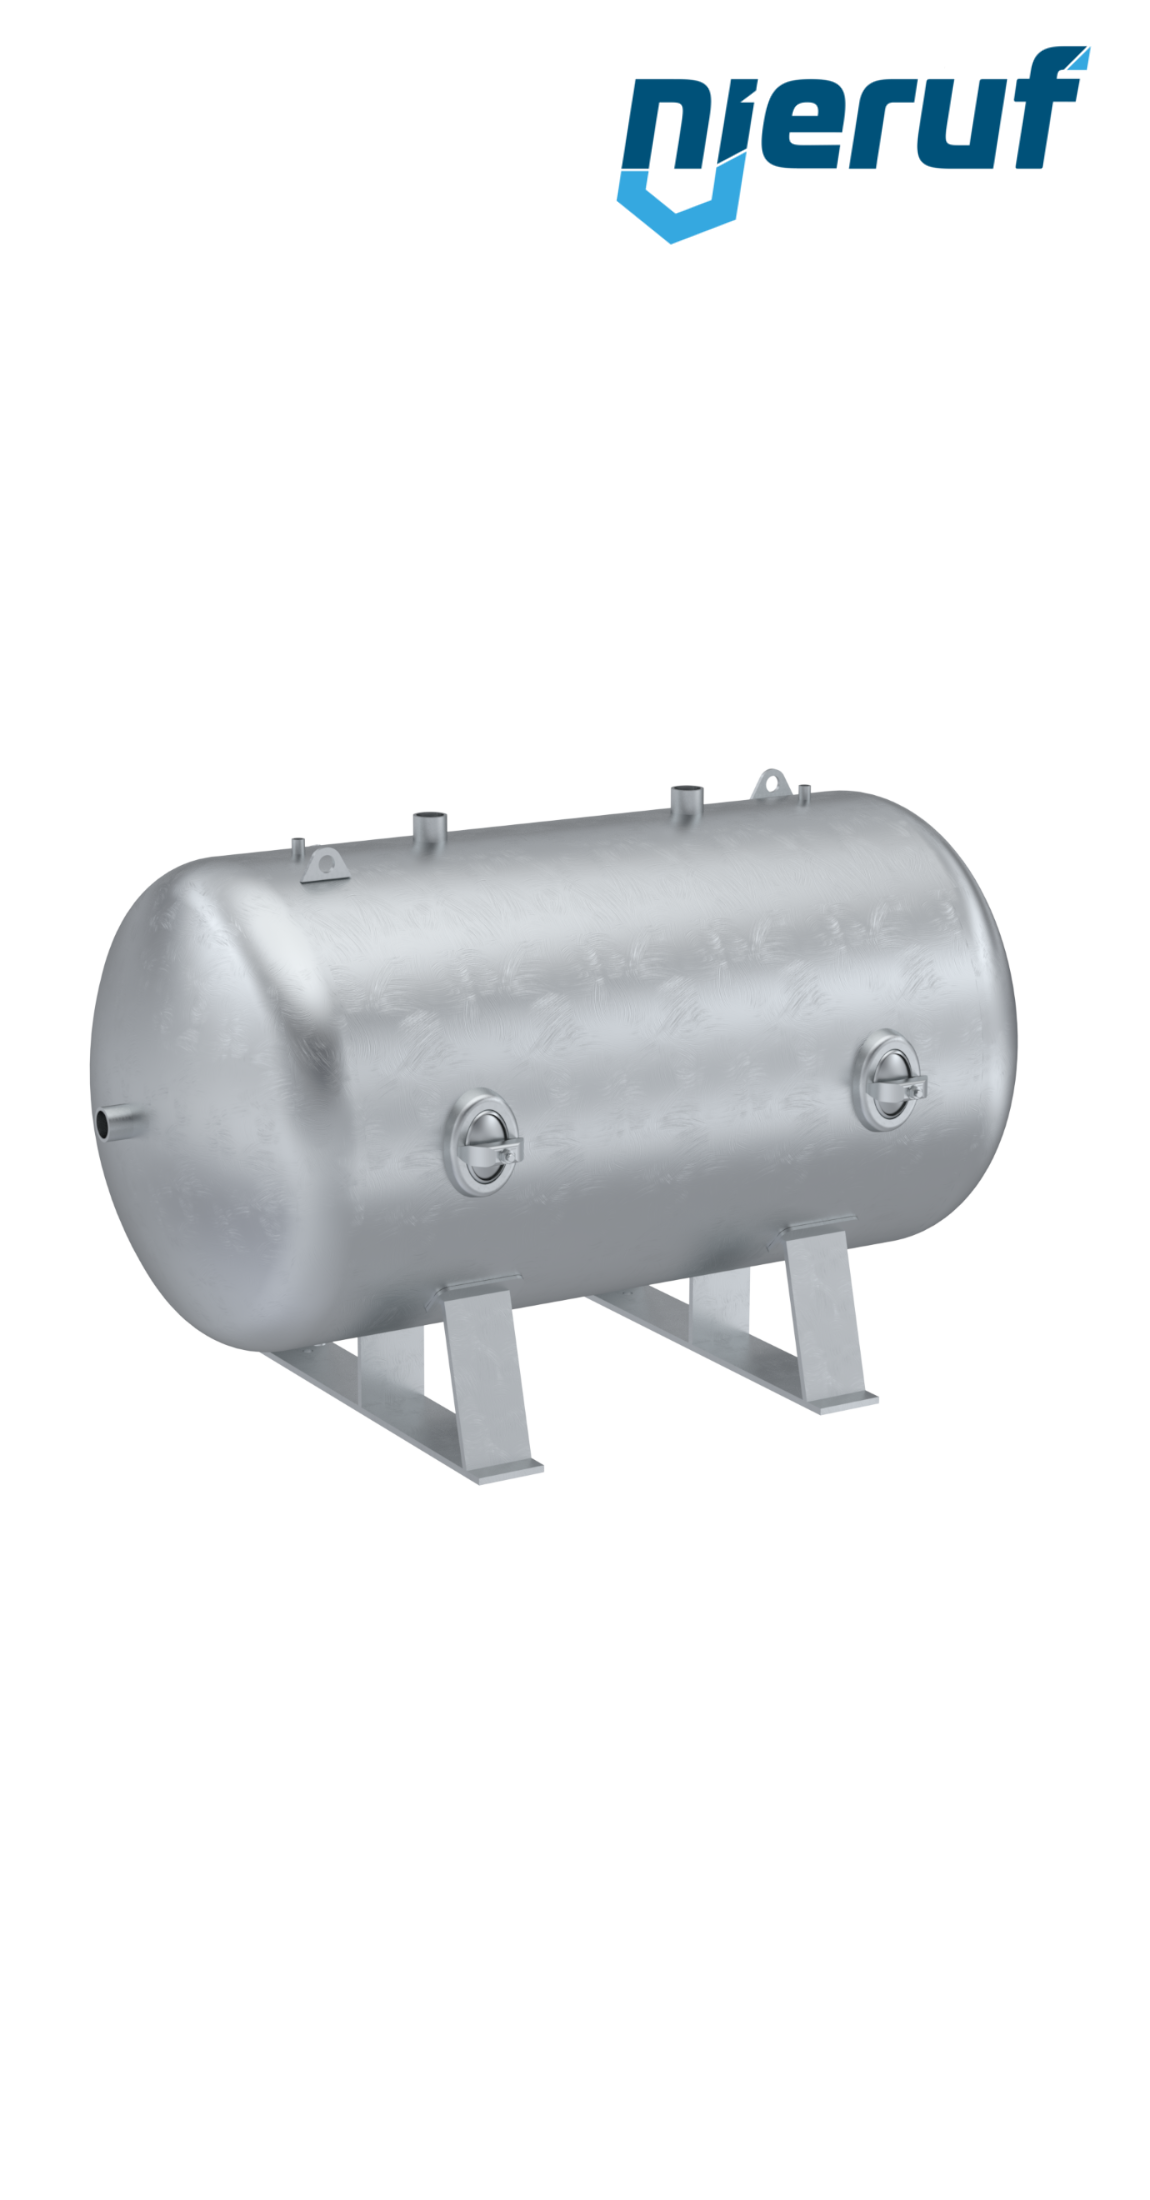 Pressure vessel horizontal BE01 5000 liter, 0-11 bar, steel galvanized, nominal size 1400 mm